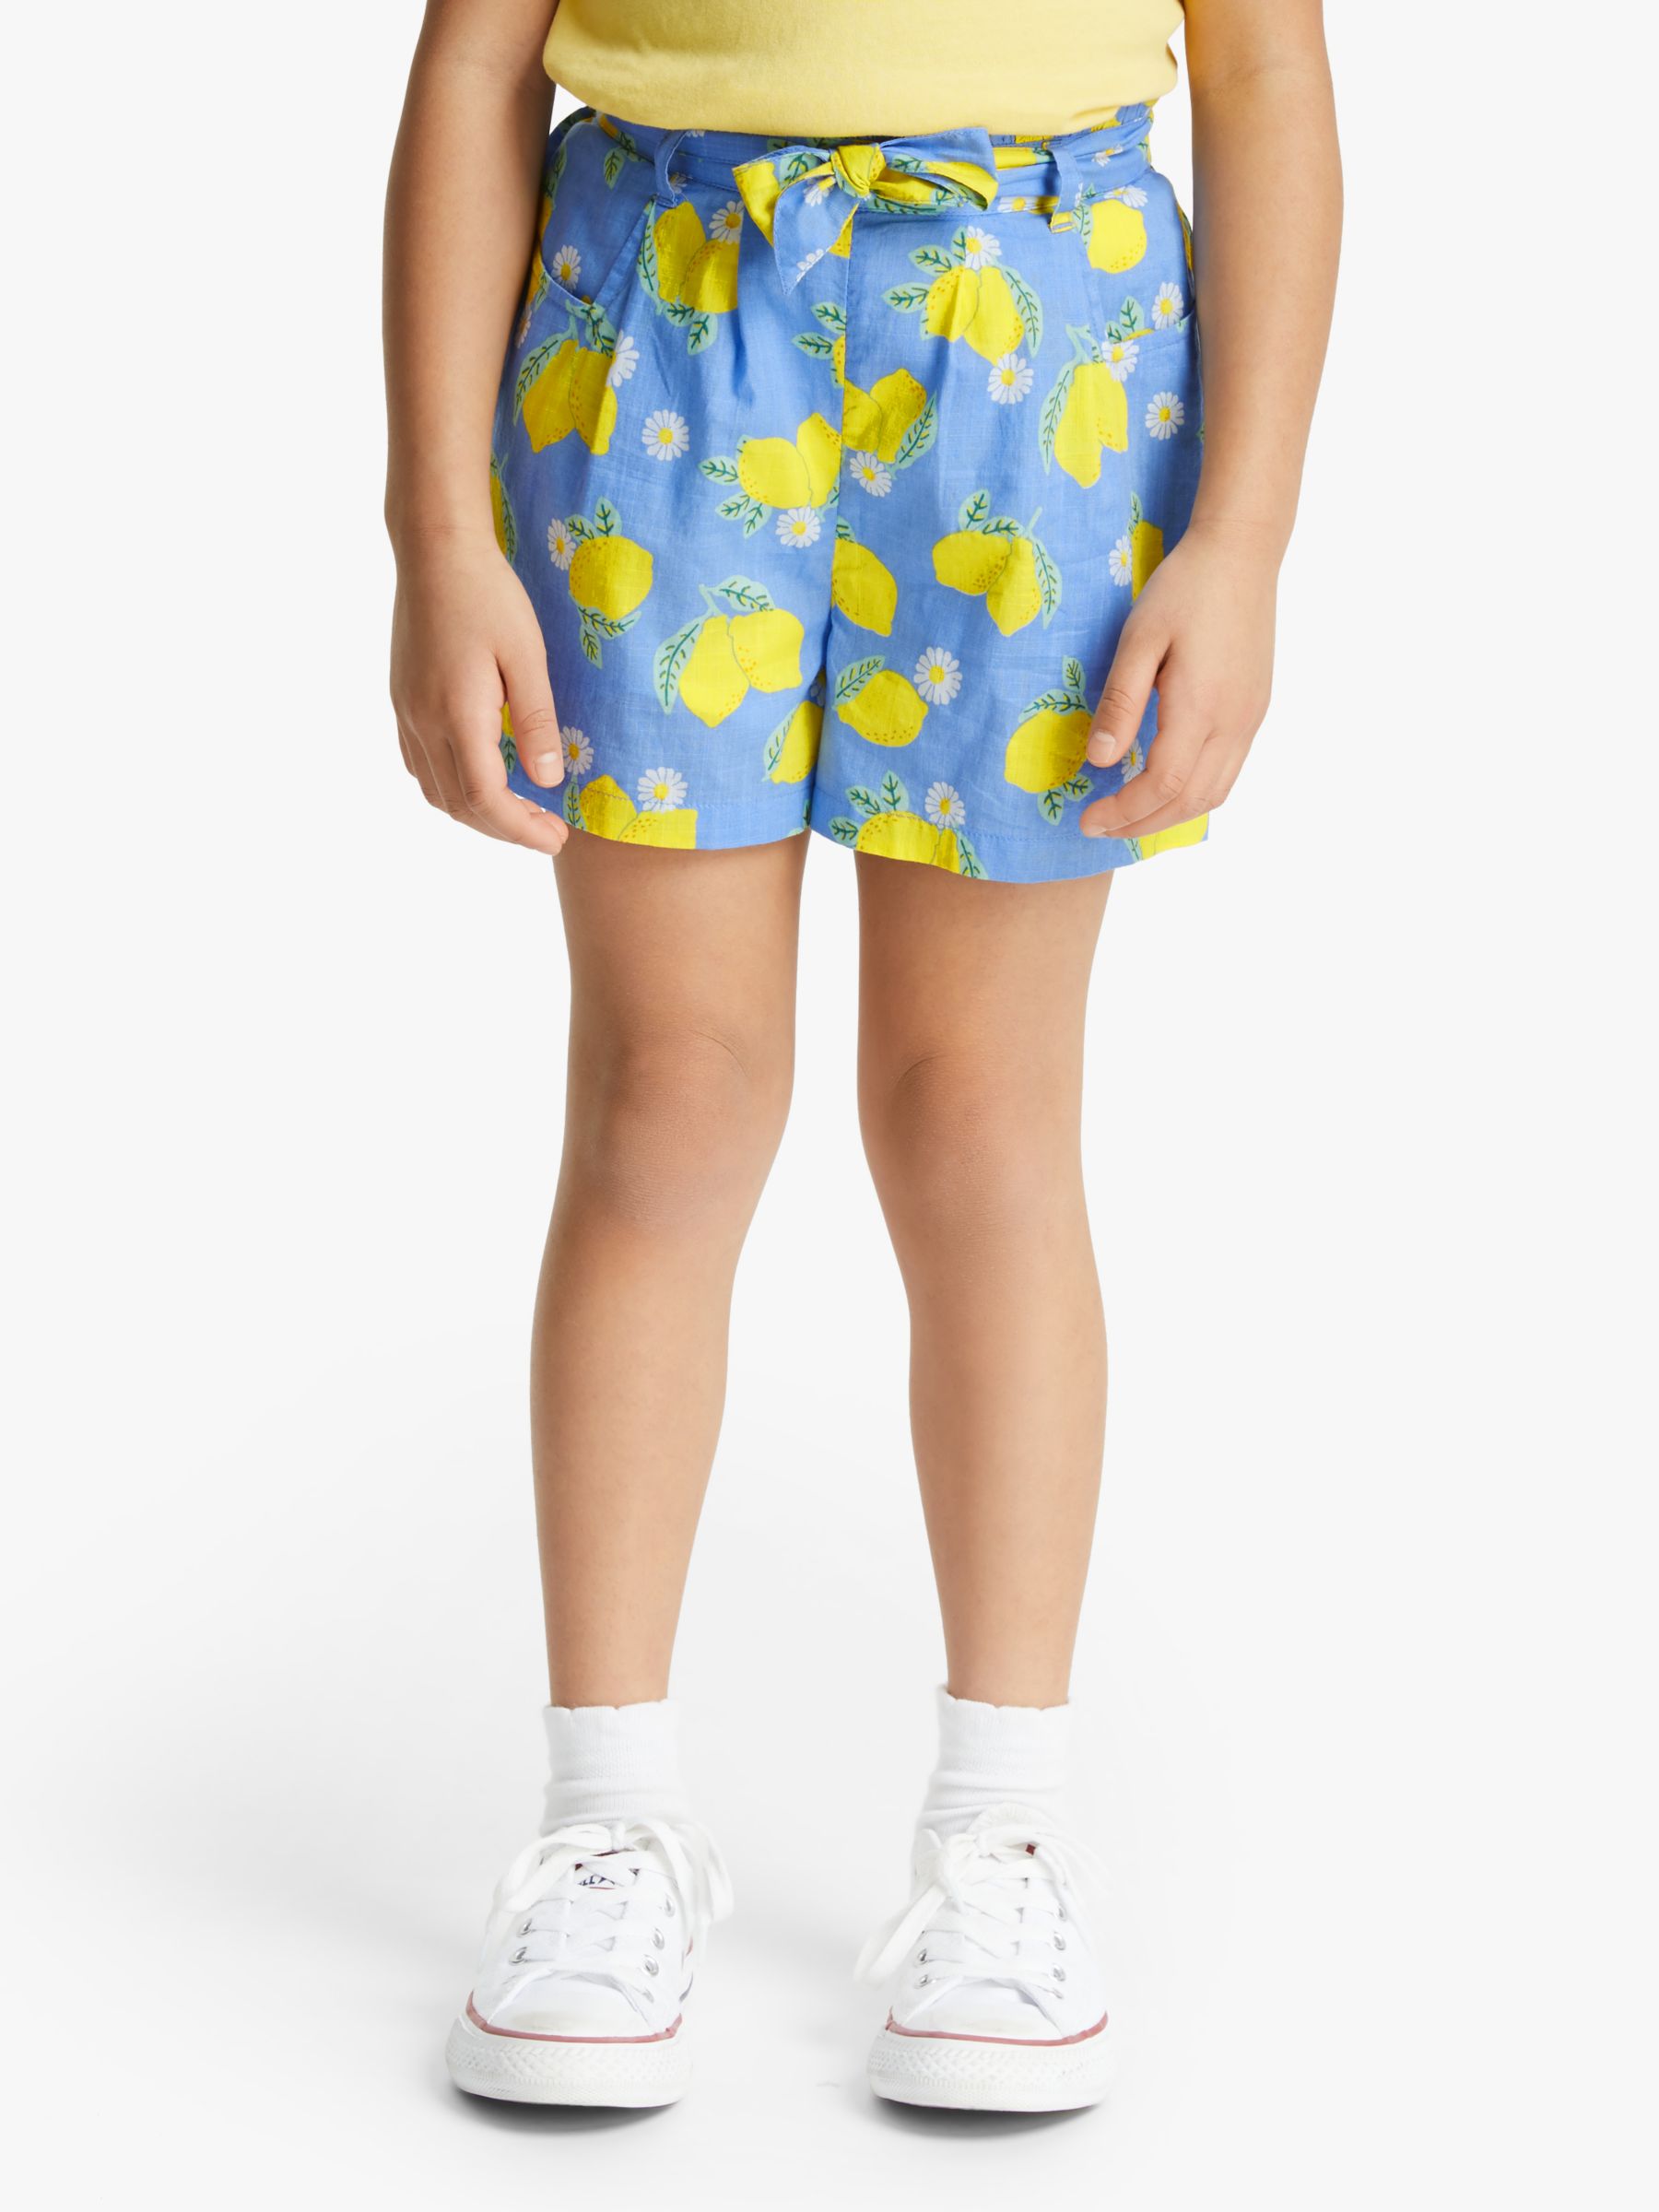 Partners Girls' Lemon Shorts, Blue 